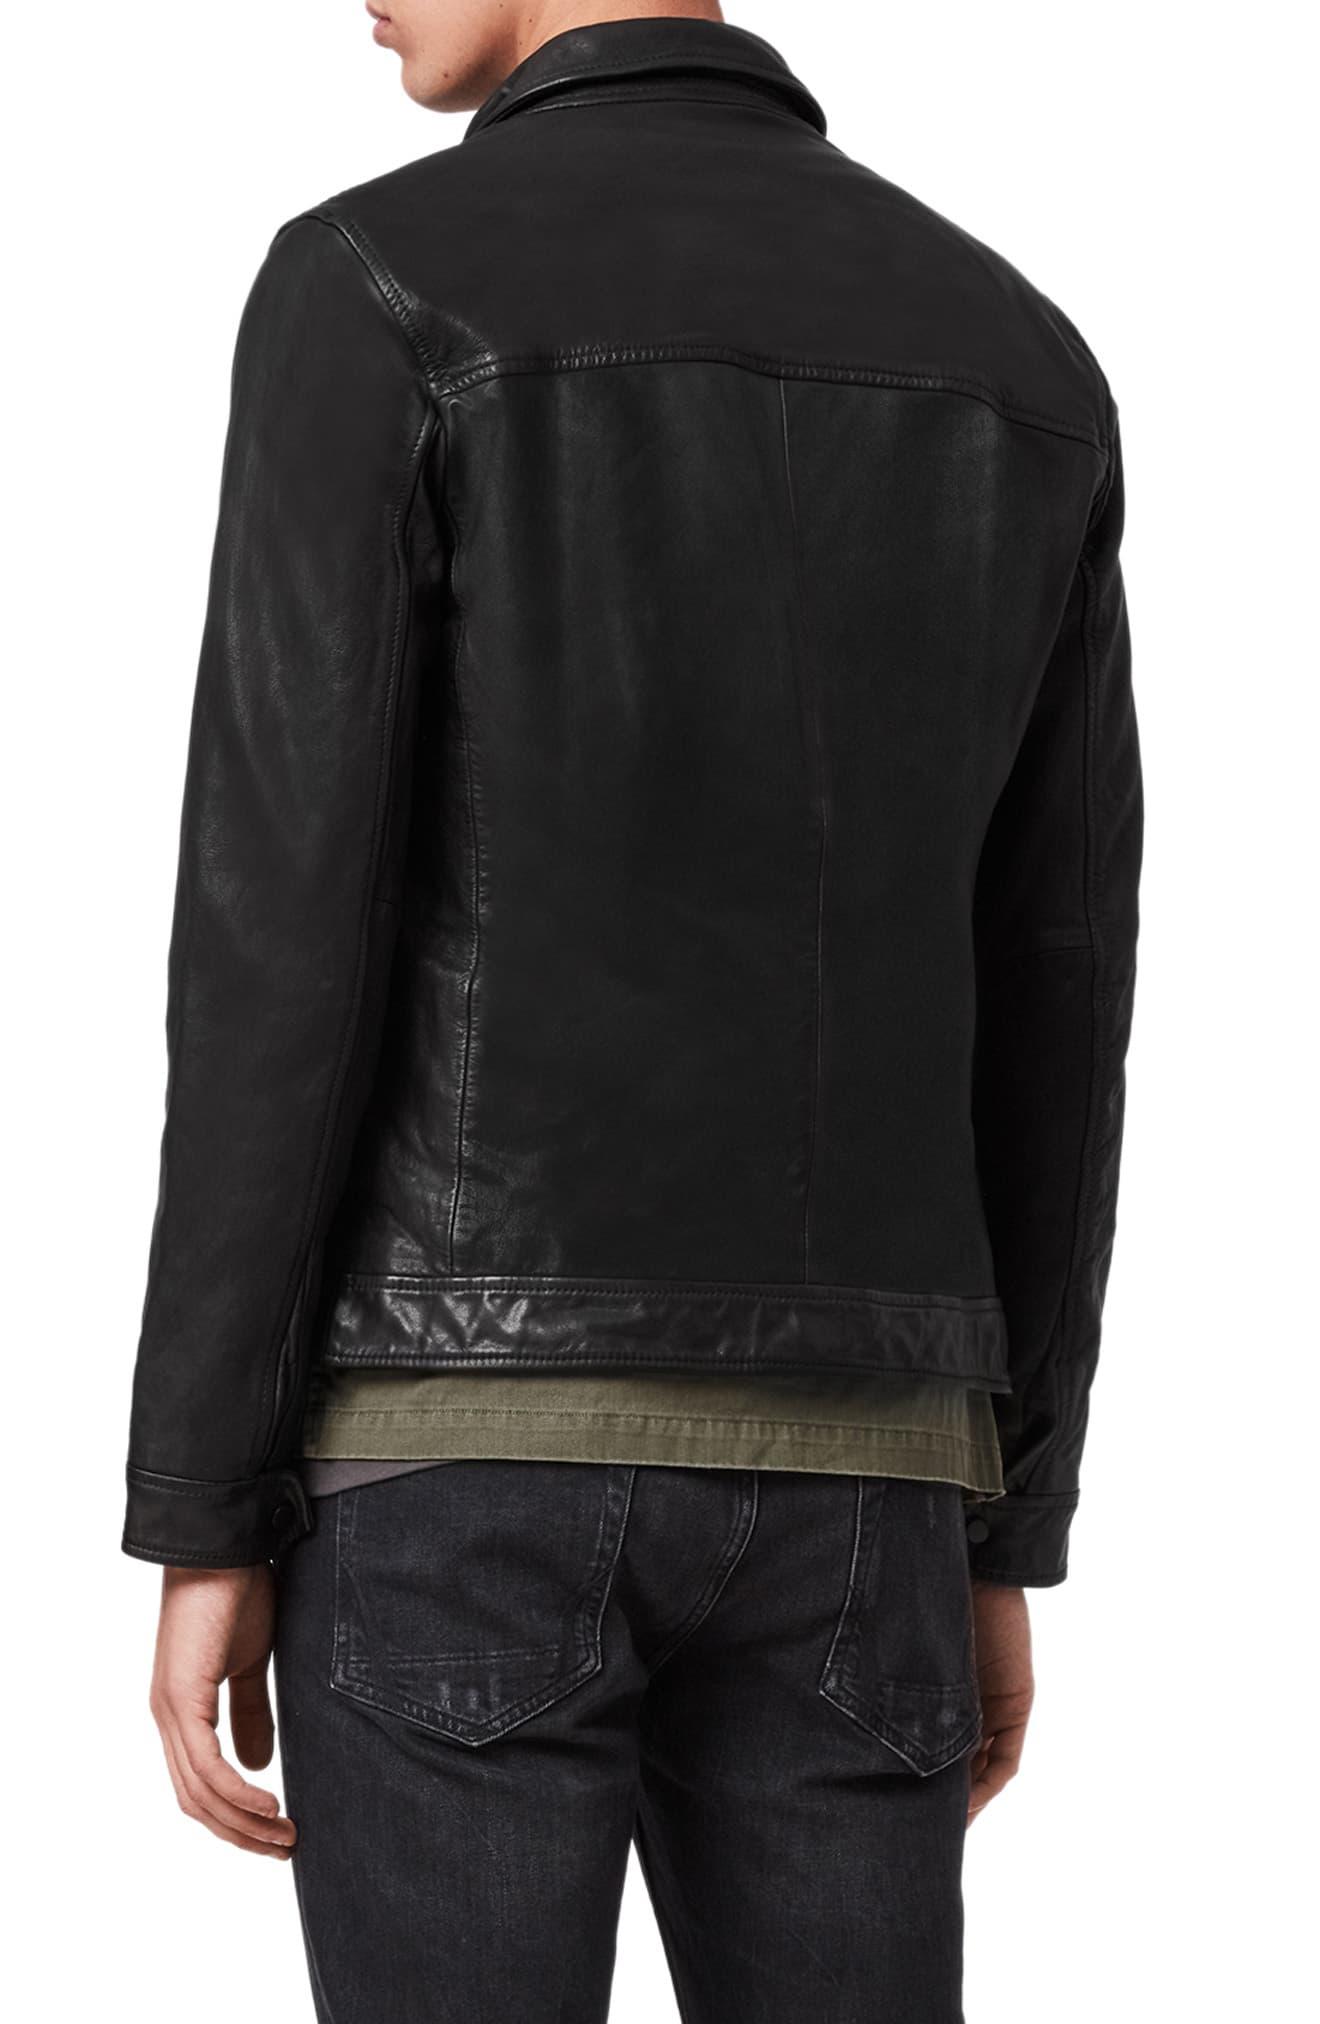 AllSaints Lark Leather Jacket in Black for Men - Lyst